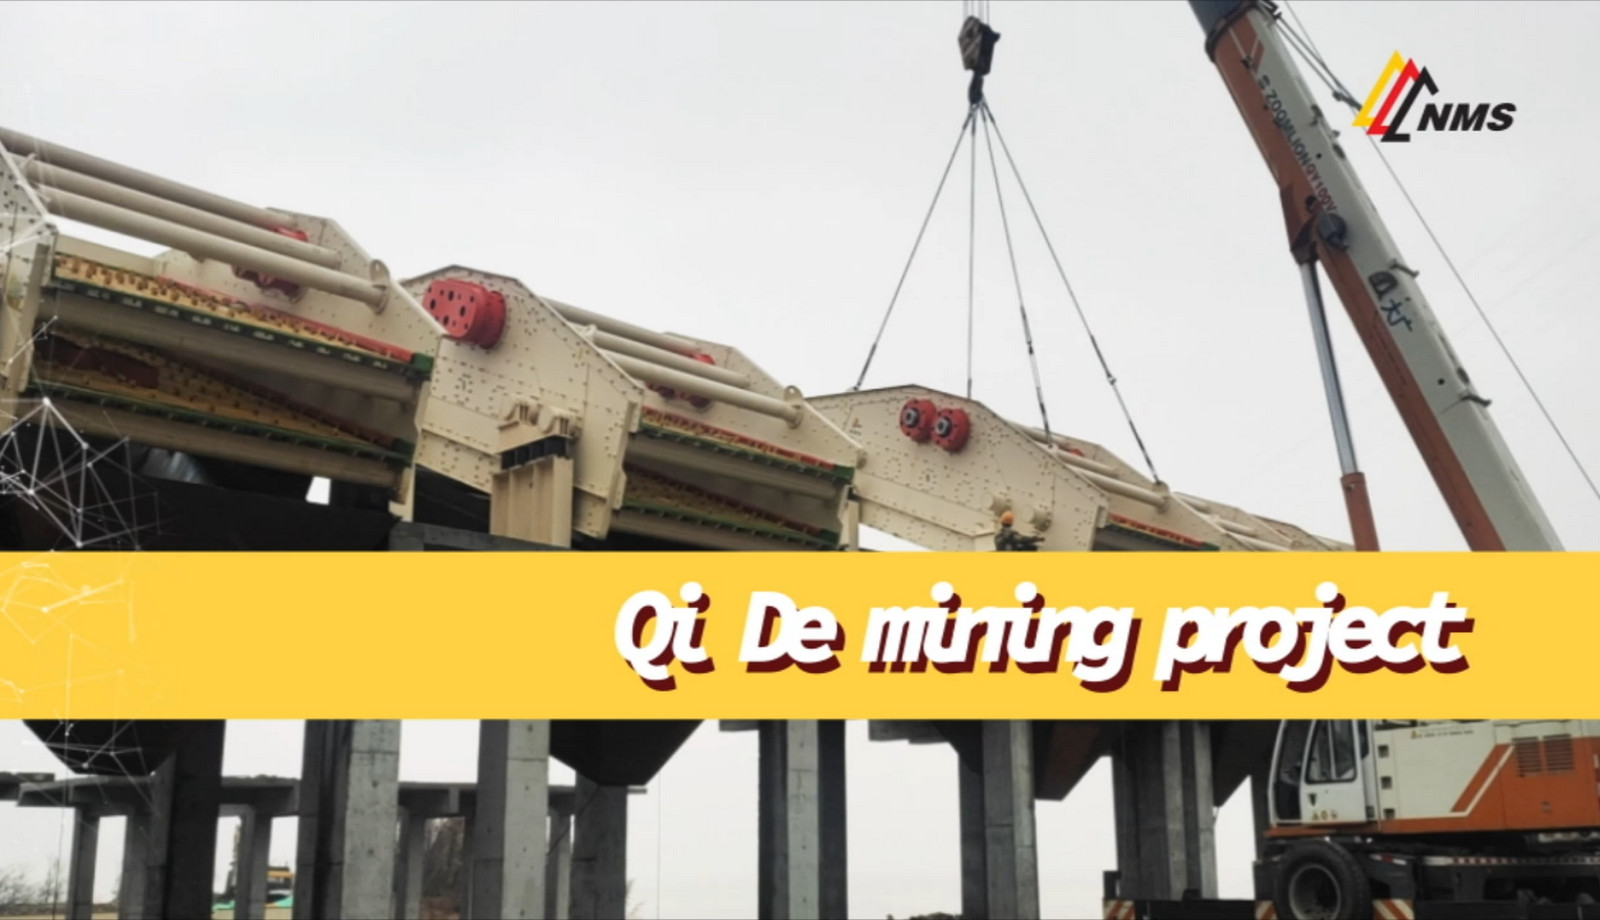 NMS Qide Mining Project of Ningbo Daxie Development Zone